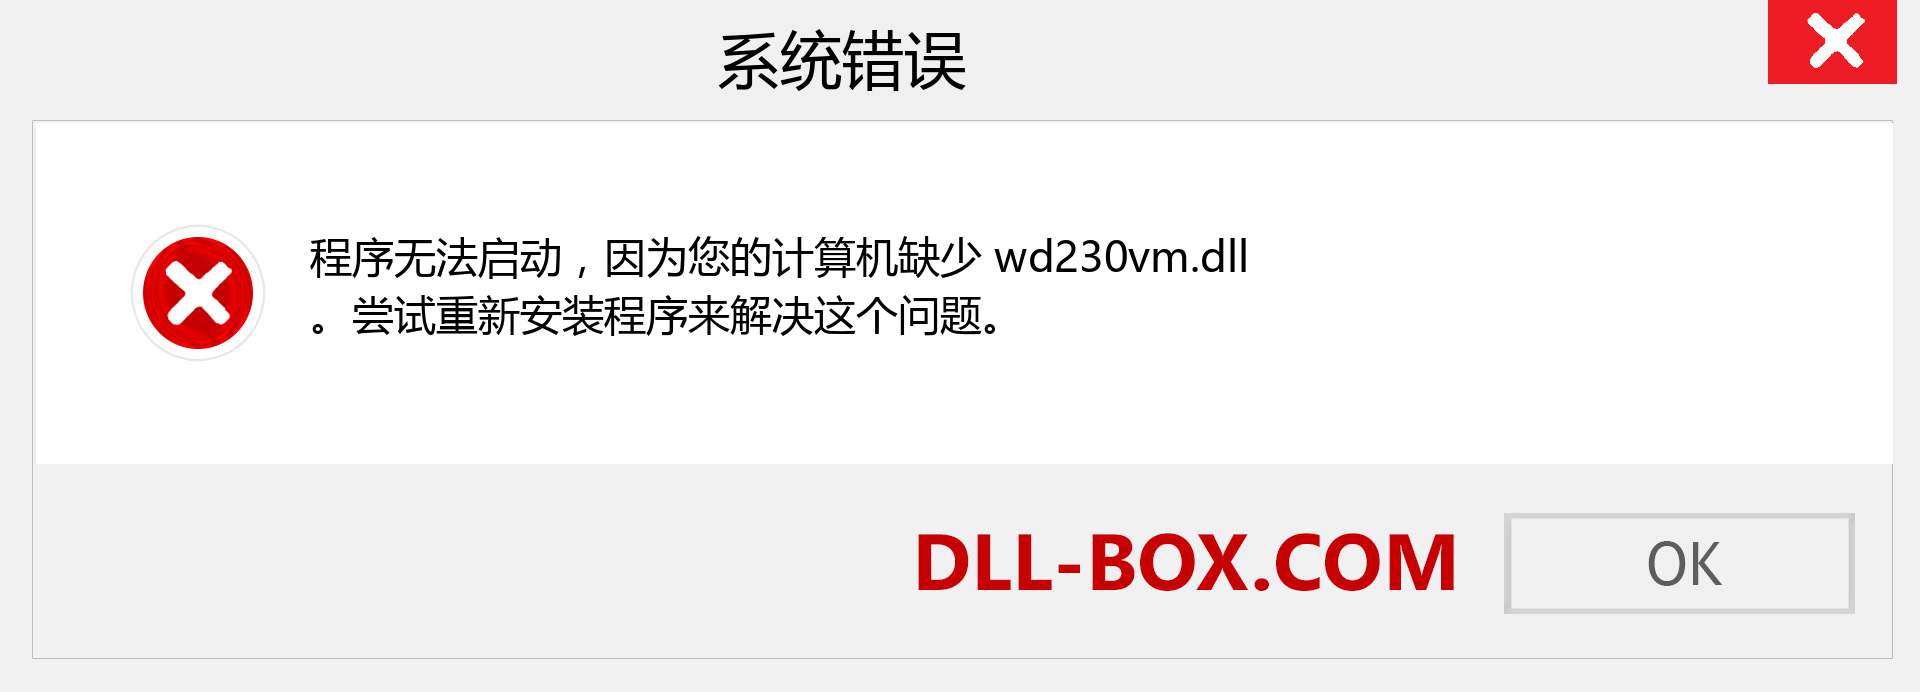 wd230vm.dll 文件丢失？。 适用于 Windows 7、8、10 的下载 - 修复 Windows、照片、图像上的 wd230vm dll 丢失错误